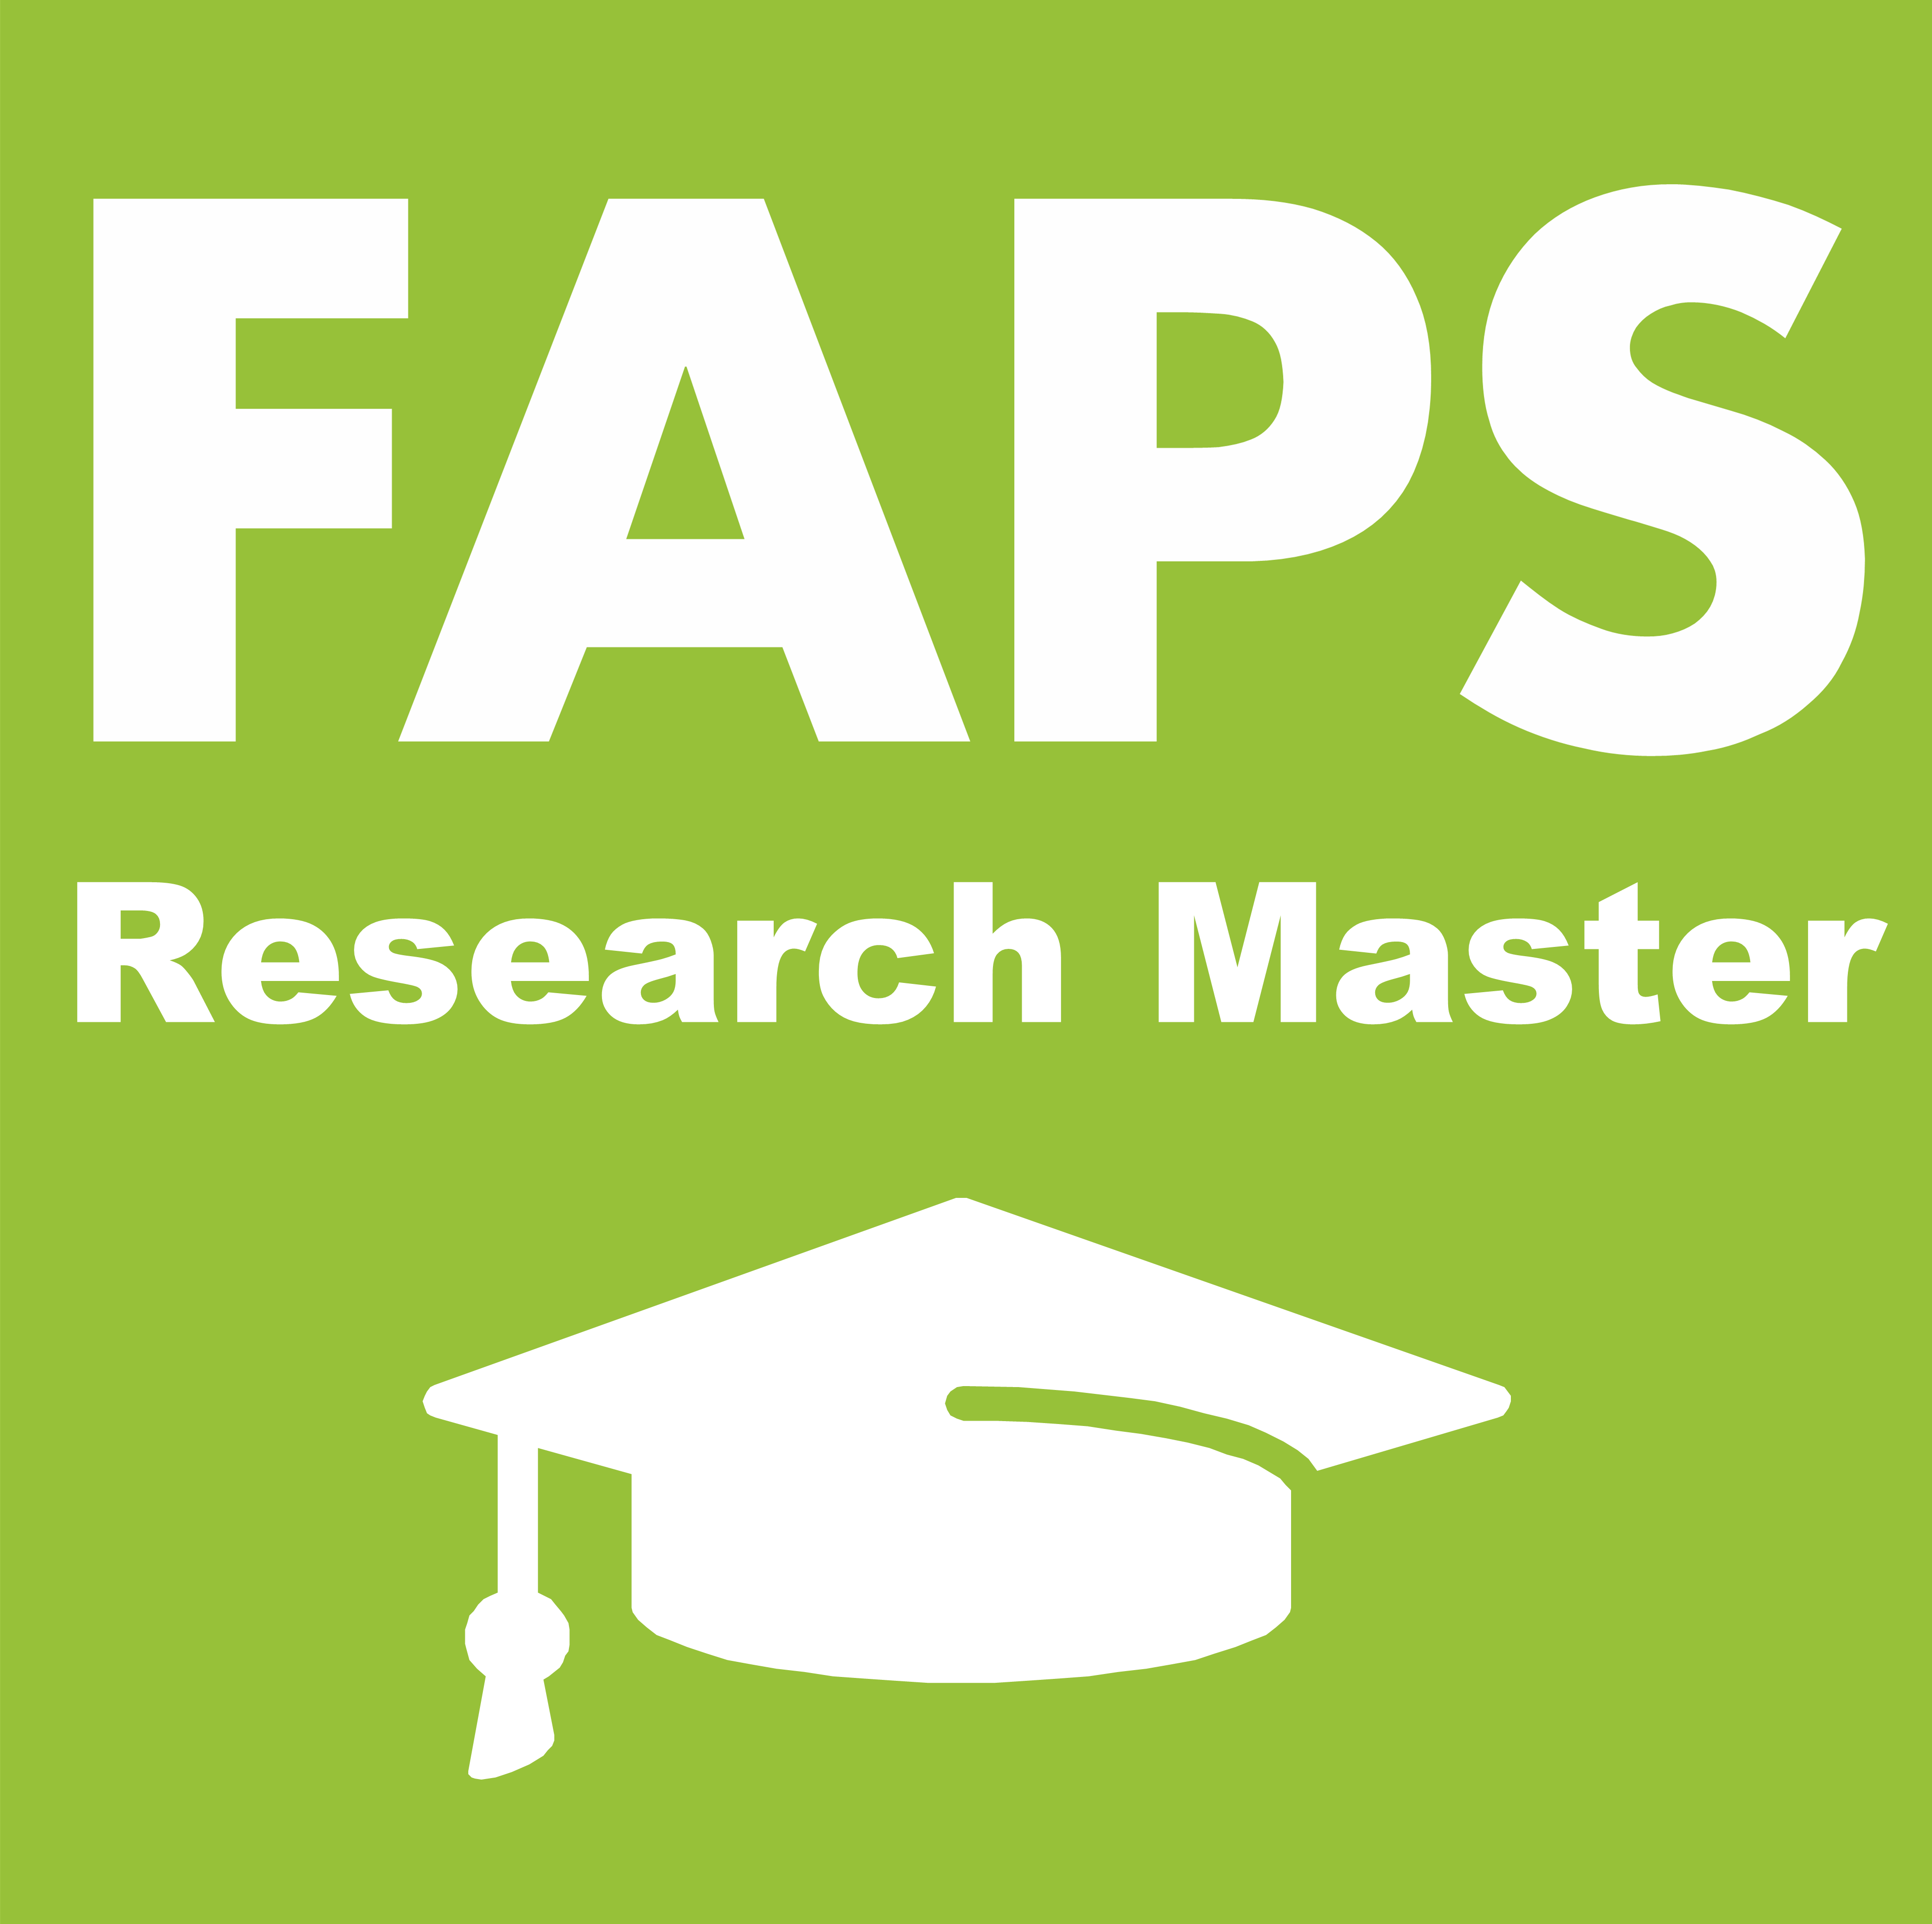 Research Master Logo